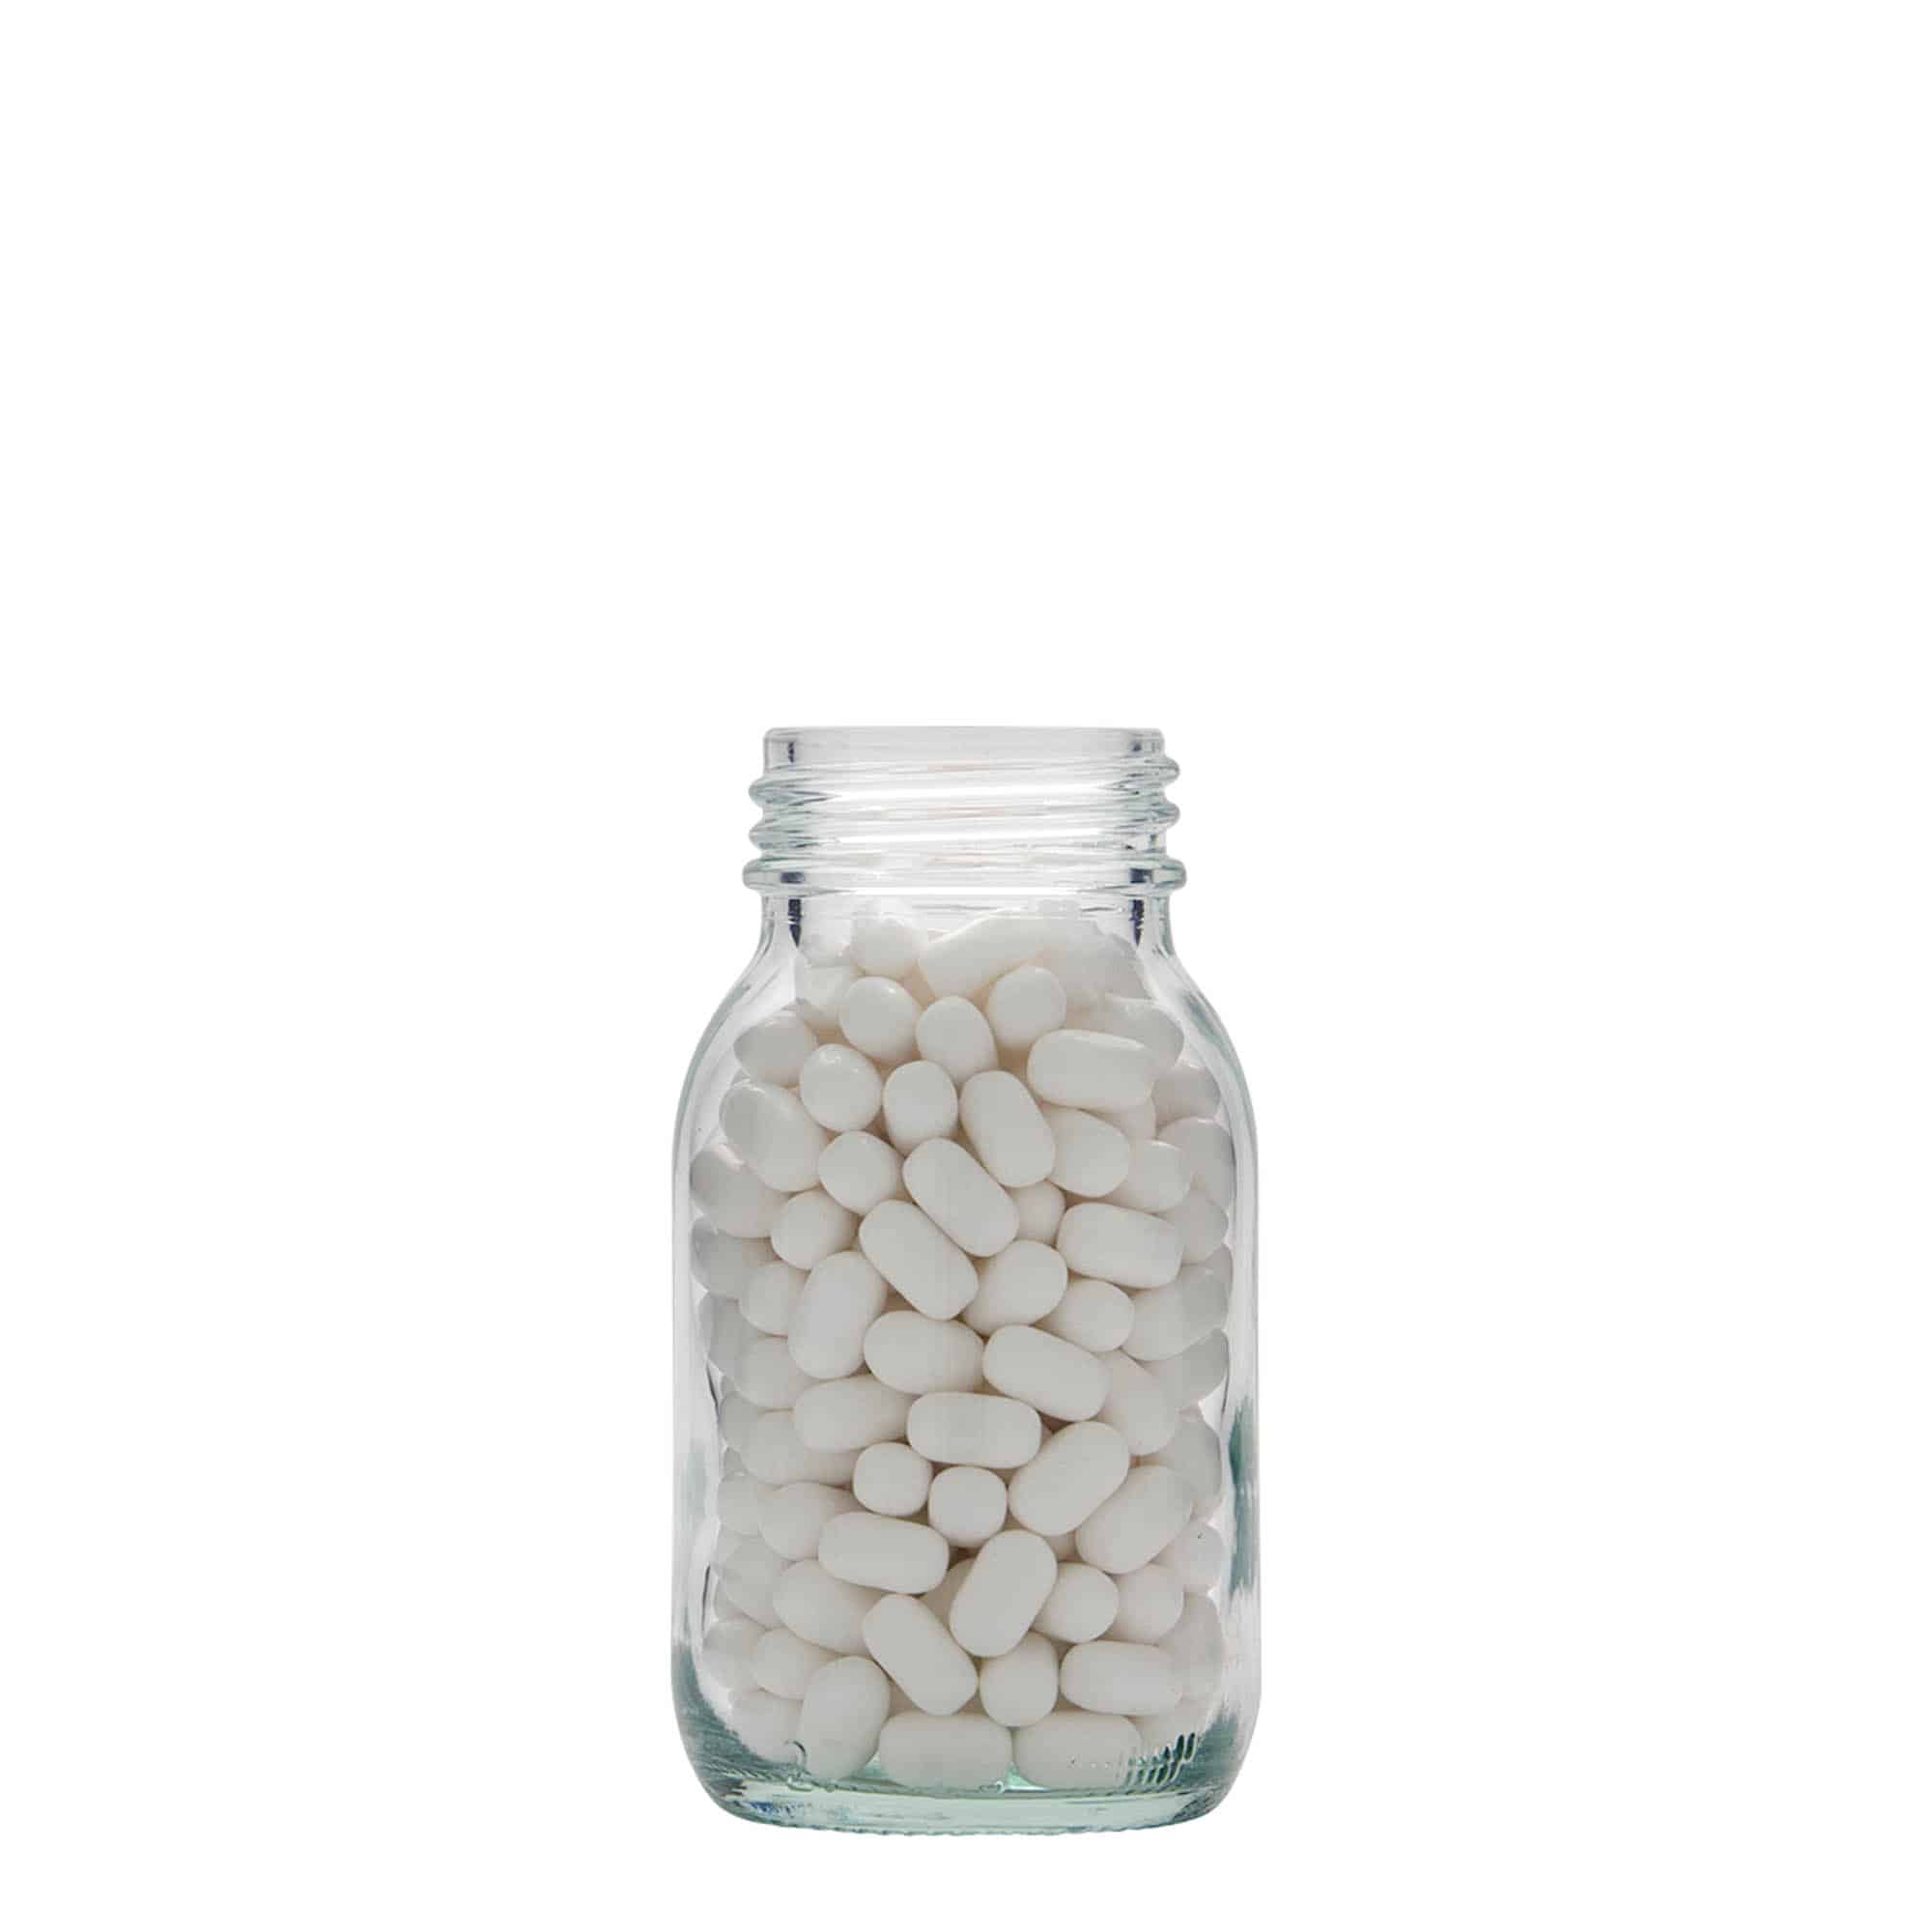 125 ml wide mouth jar, closure: DIN 40